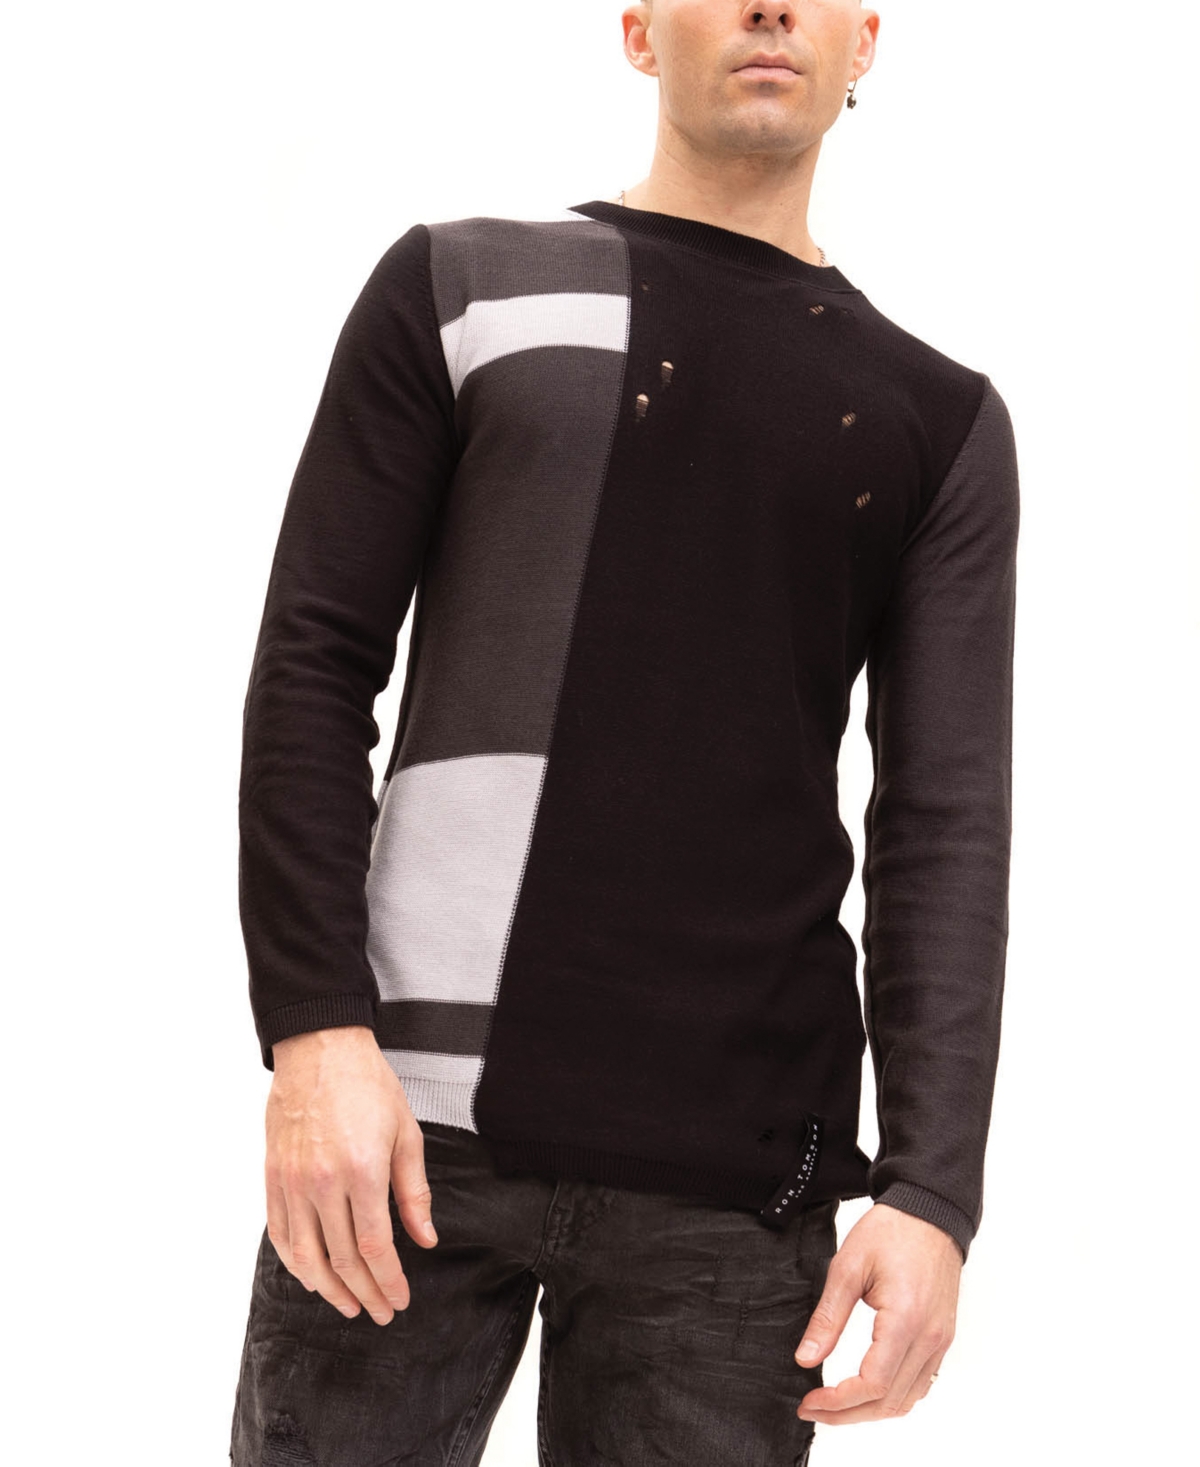 Men's Modern Color Block Sweater - Black, White